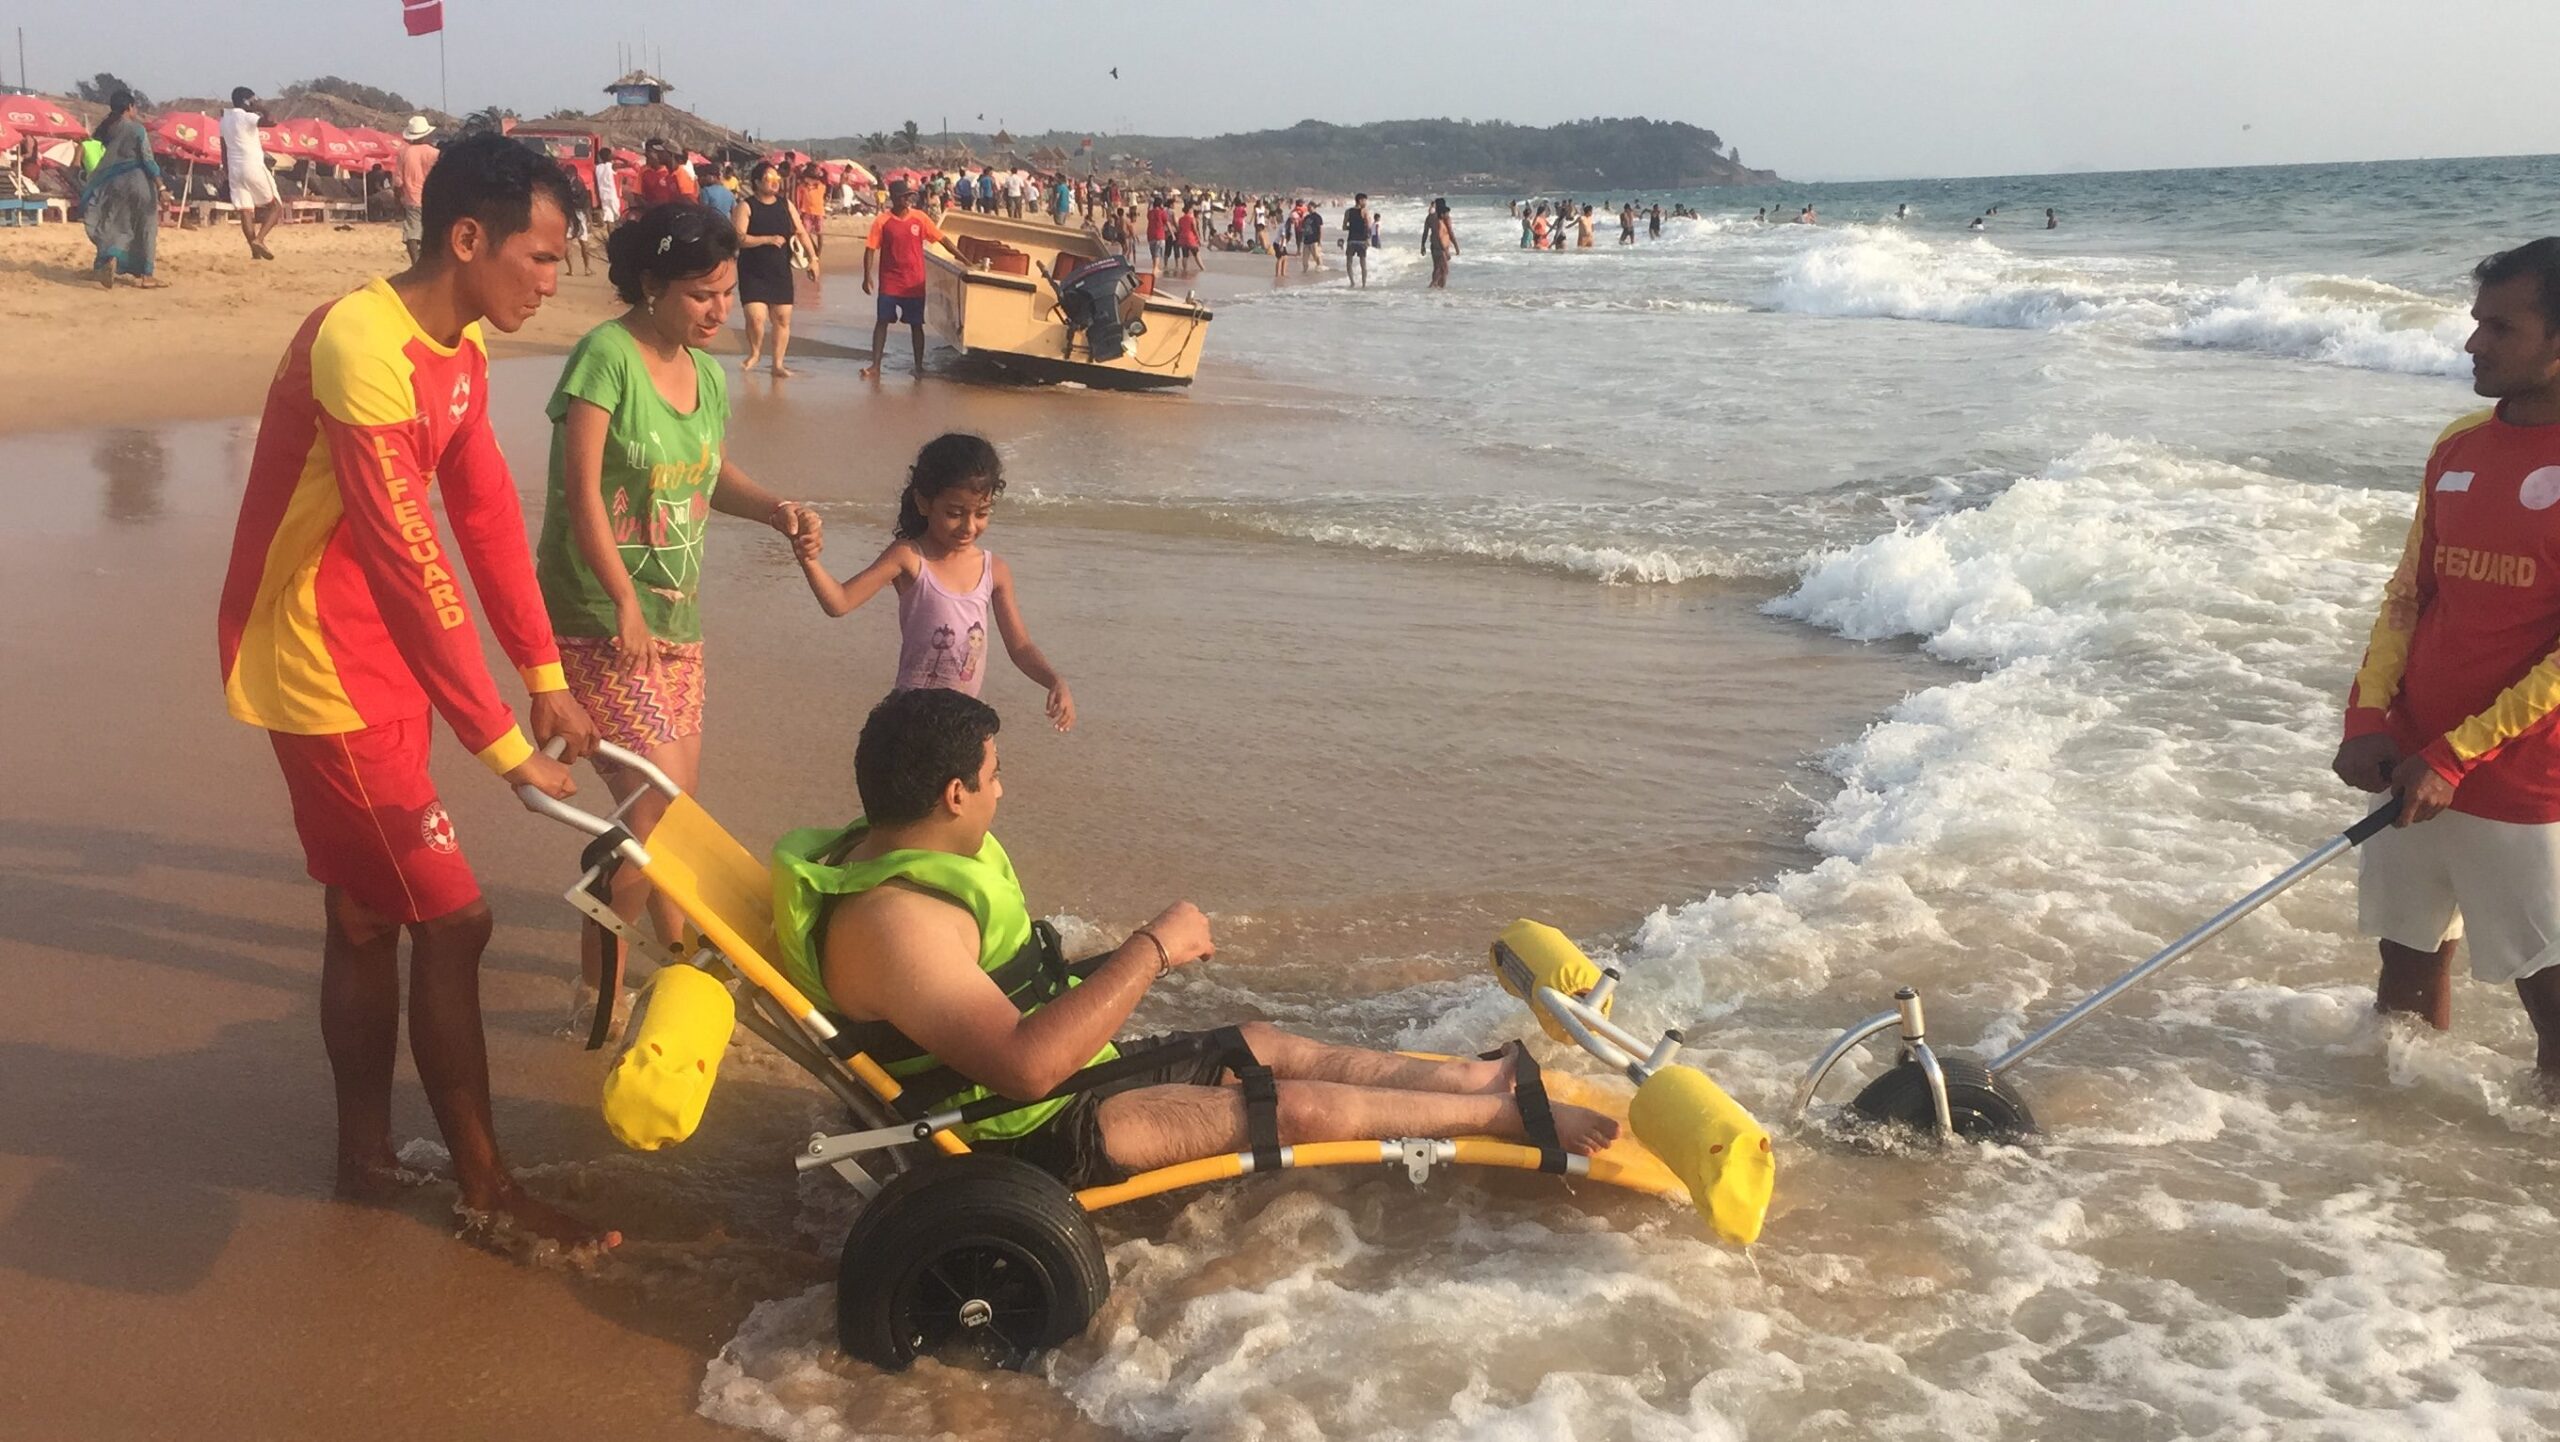 Wheelchair Users Enjoy an Accessible Beach Experience in Goa